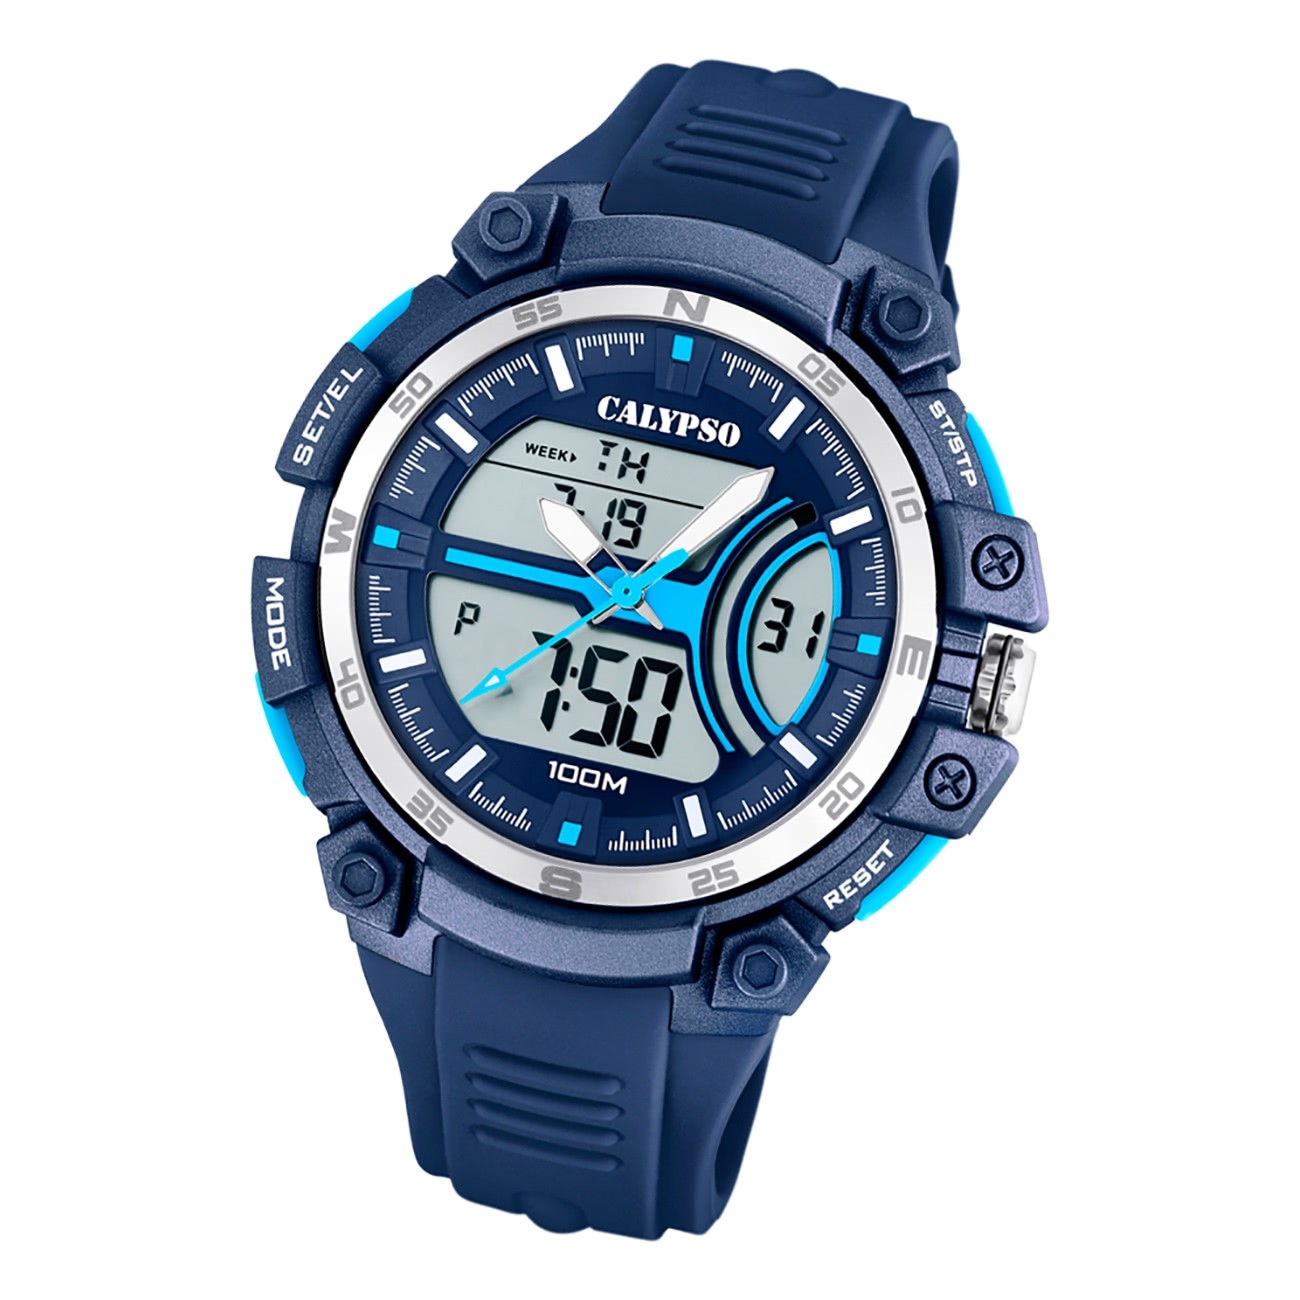 Calypso Herren Jugend Armbanduhr K5779/3 Analog-Digital Kunststoff blau UK5779/3